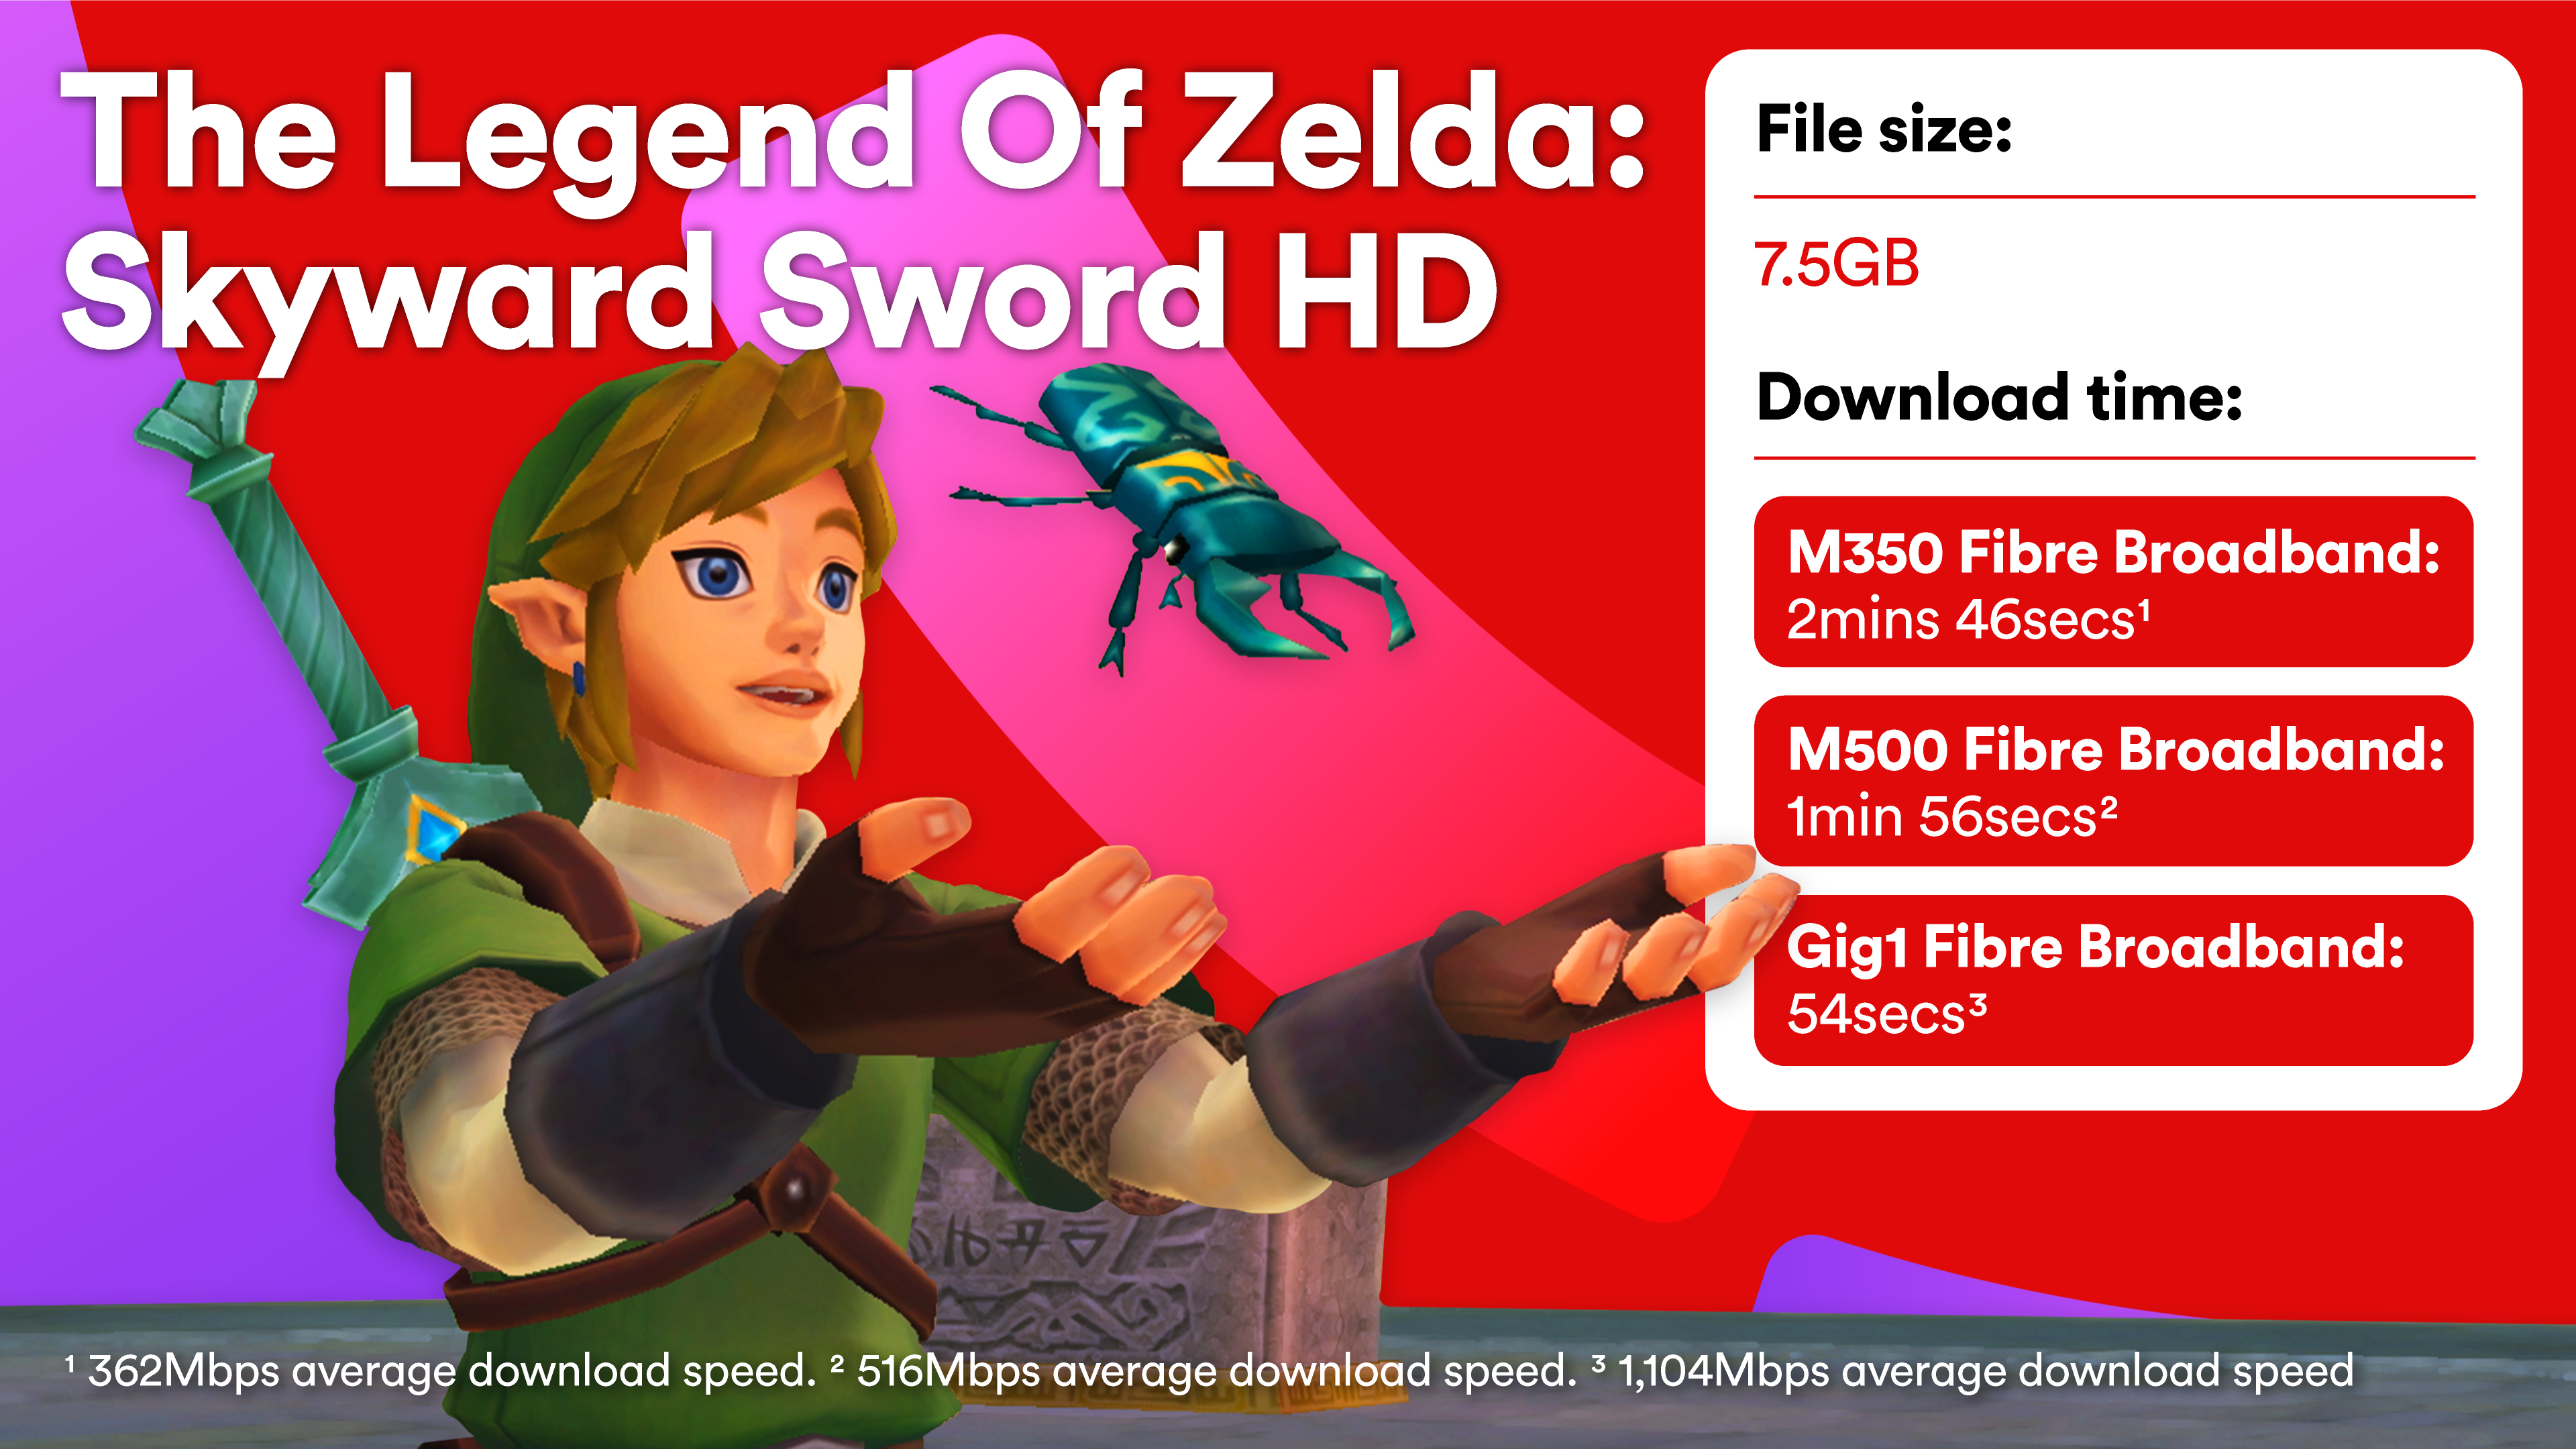 The Legend Of Zelda: Skyward Sword download information